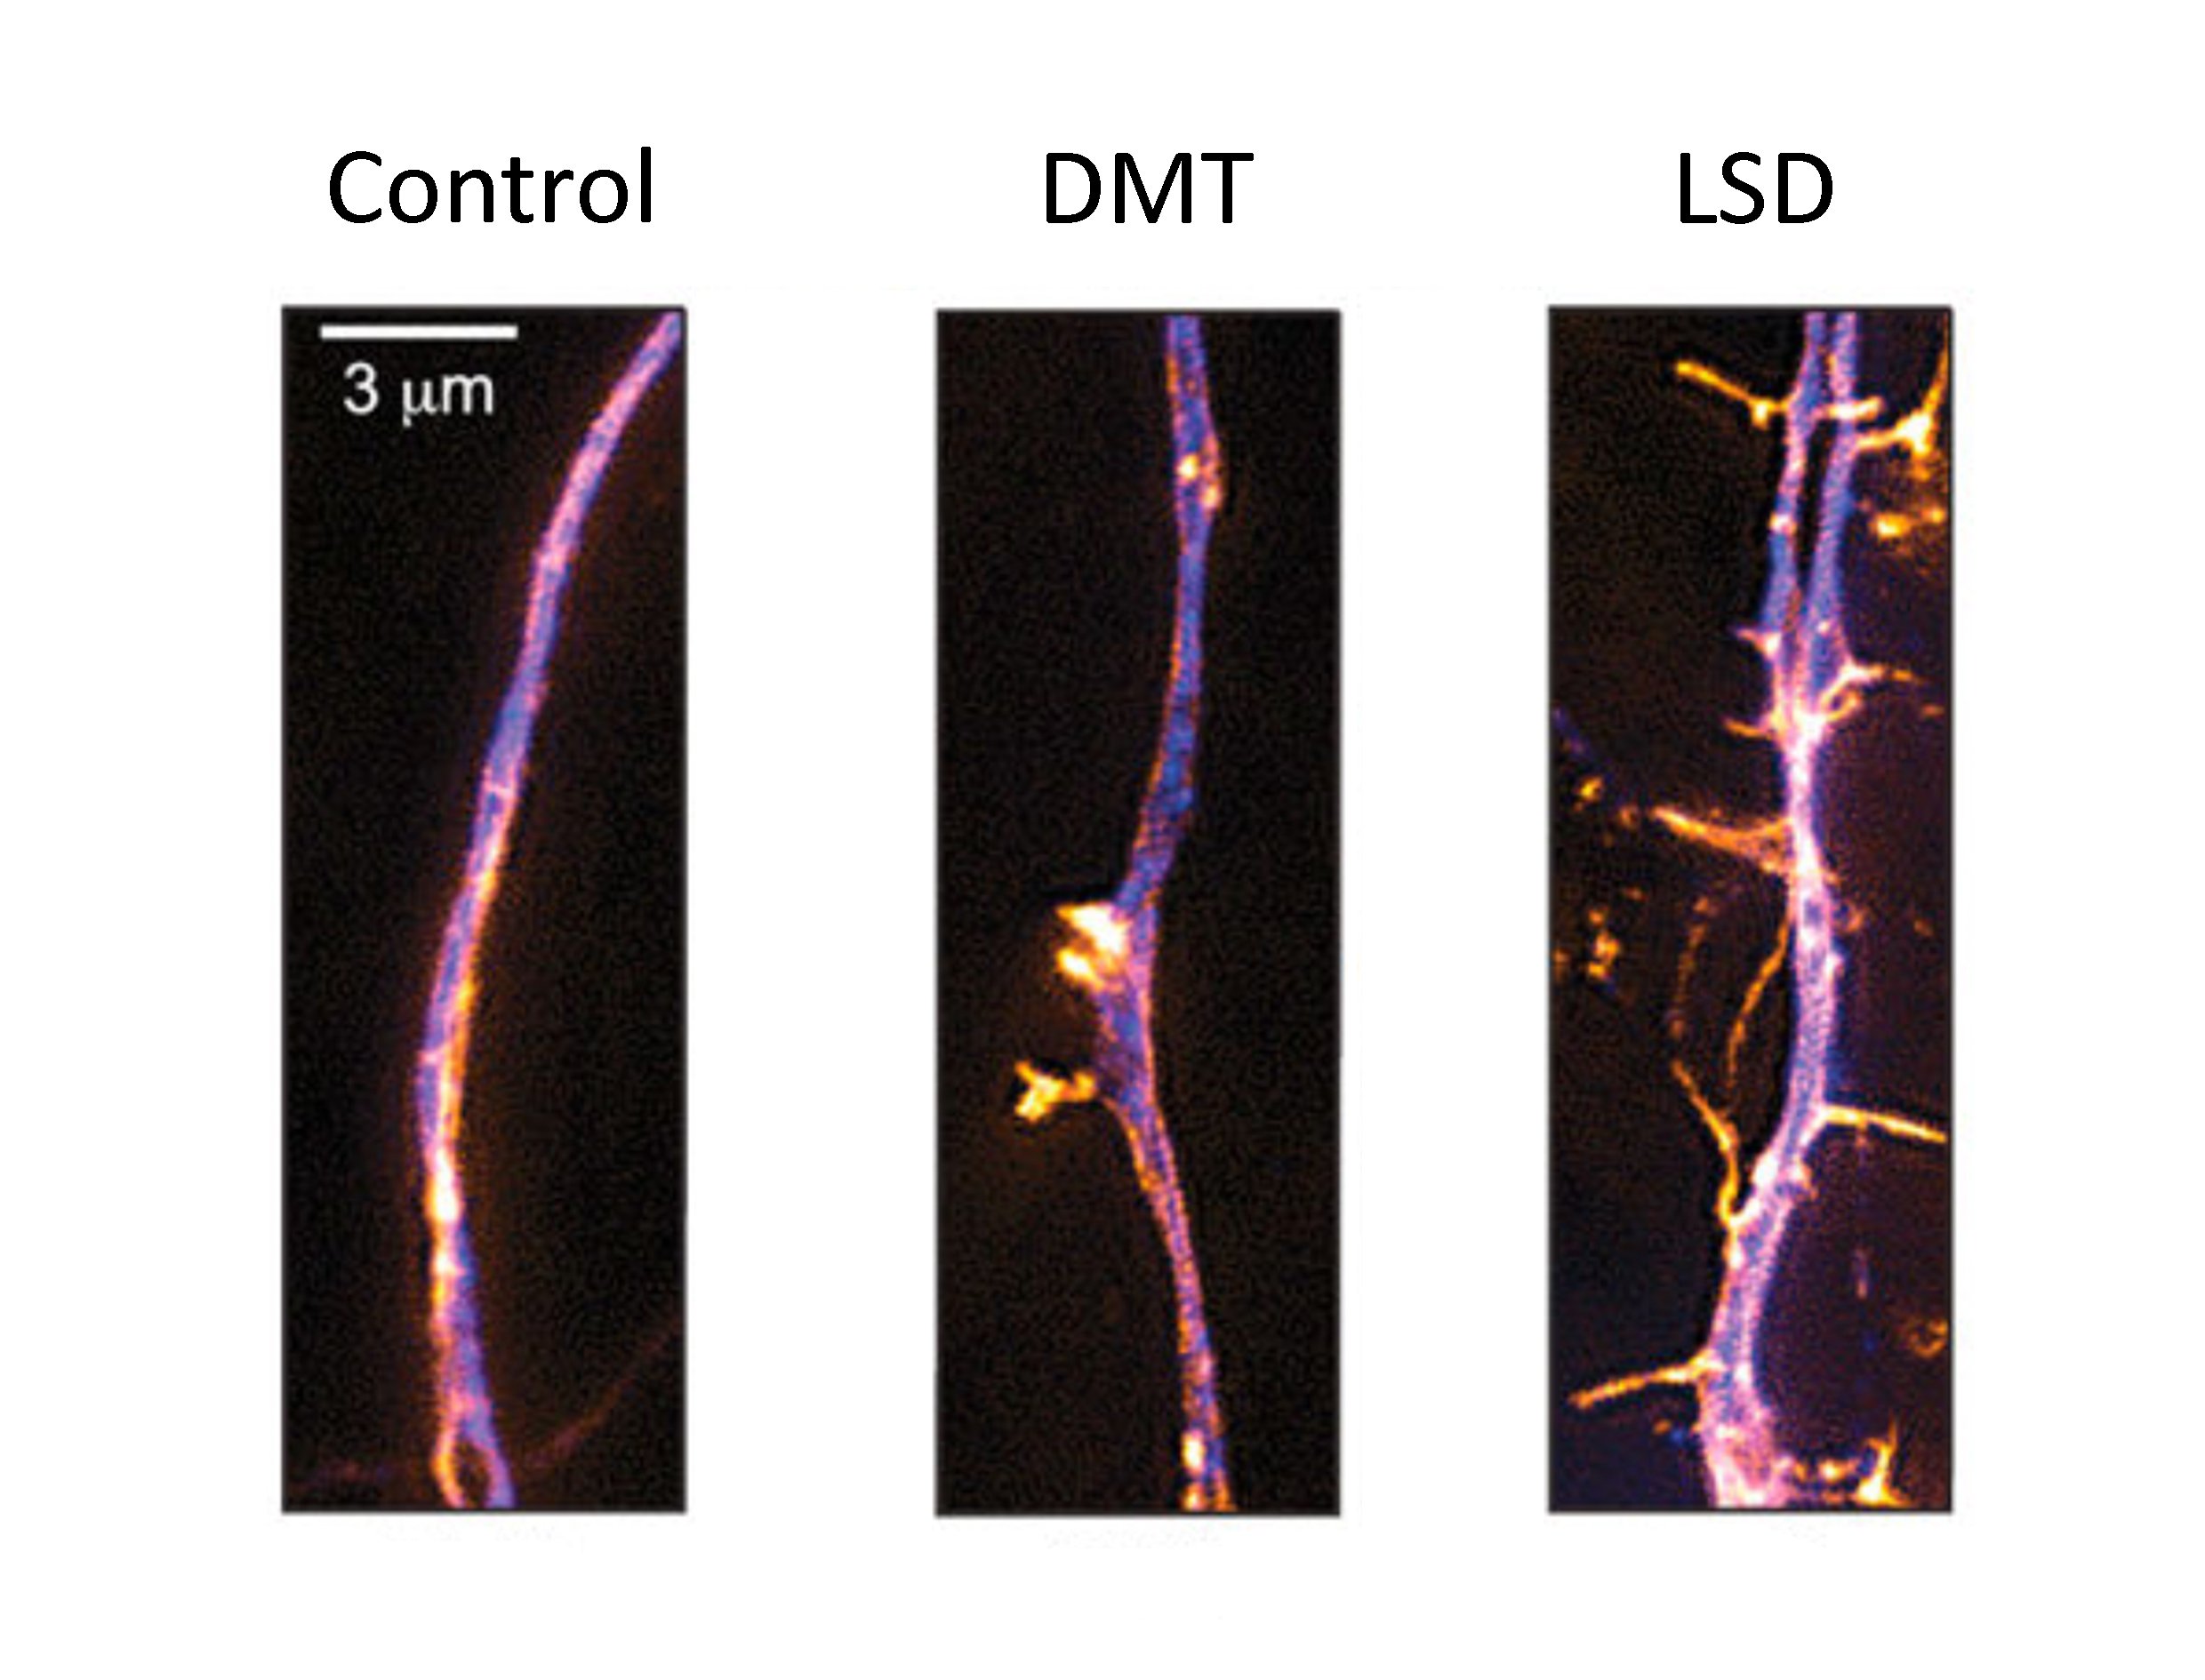 Neurogenesis - design 2 - image only